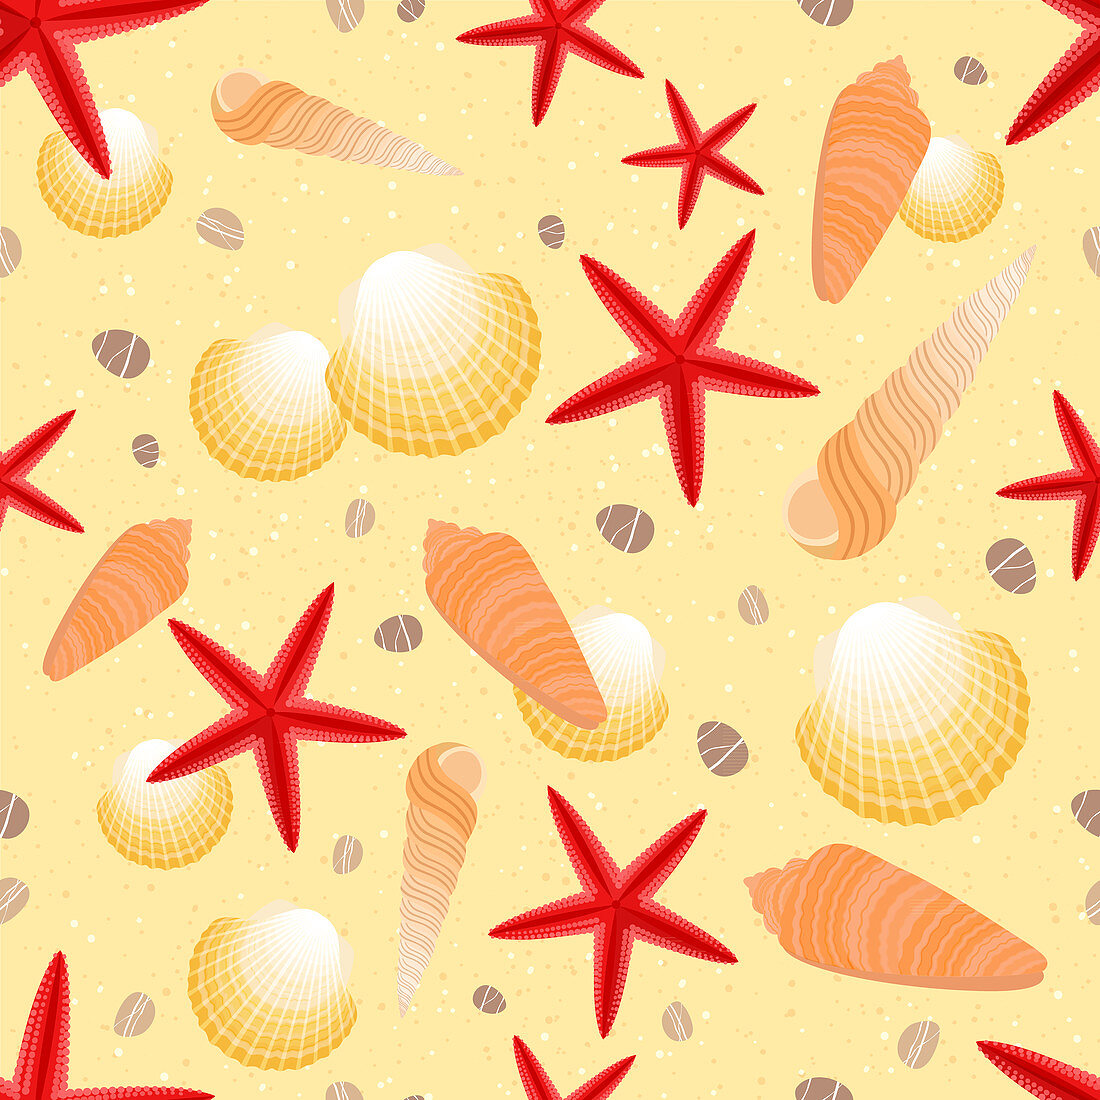 Seashells and starfish, illustration